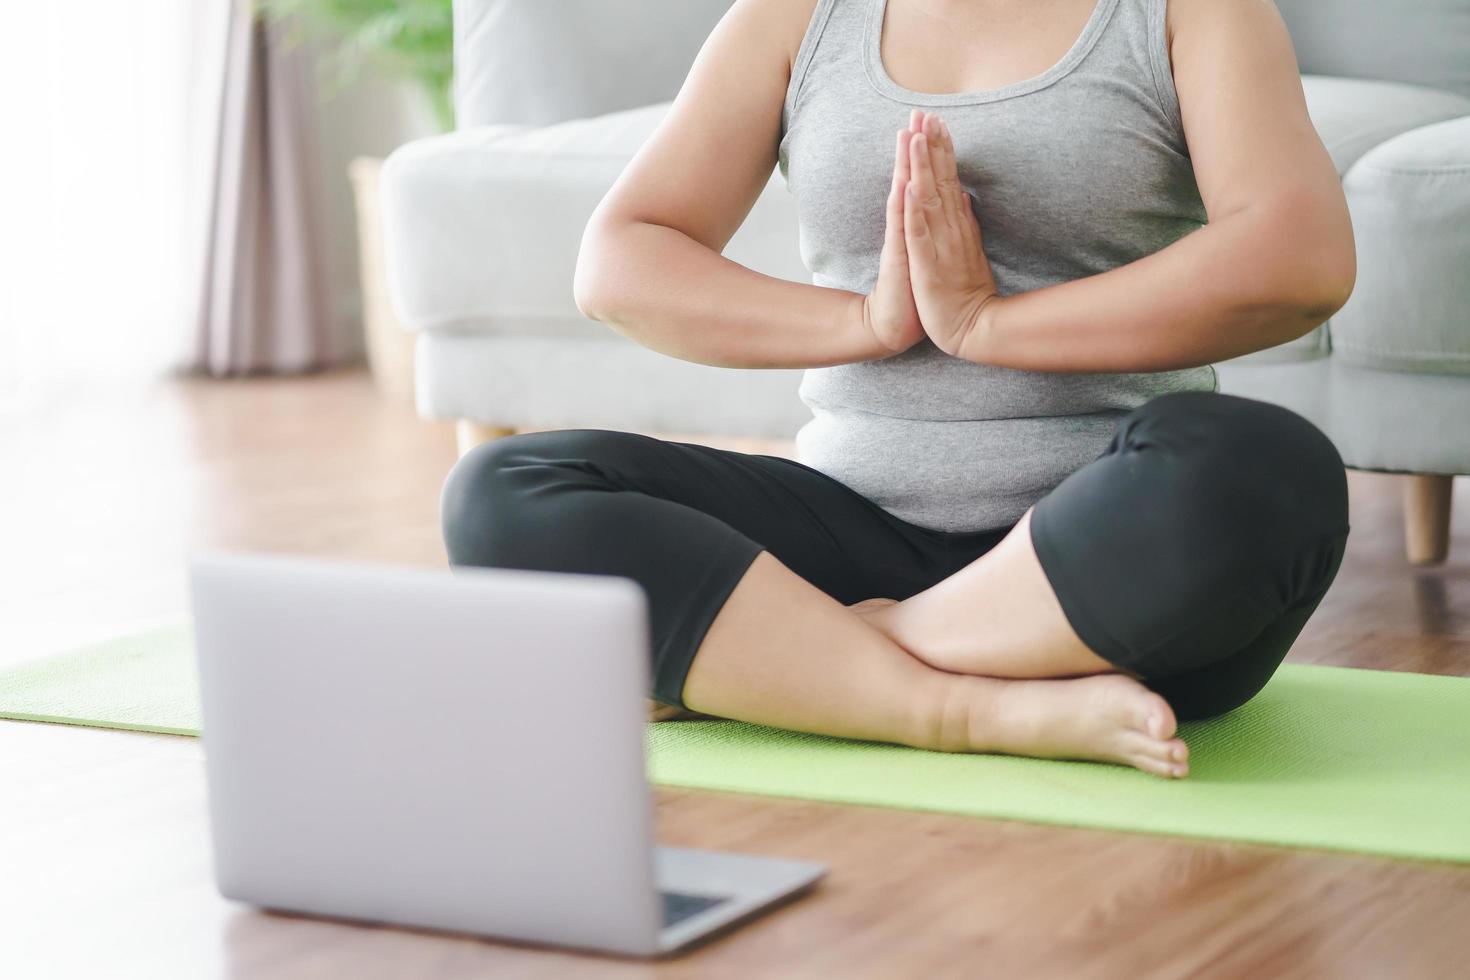 gorda rechonchuda pratica ioga online no laptop. foto